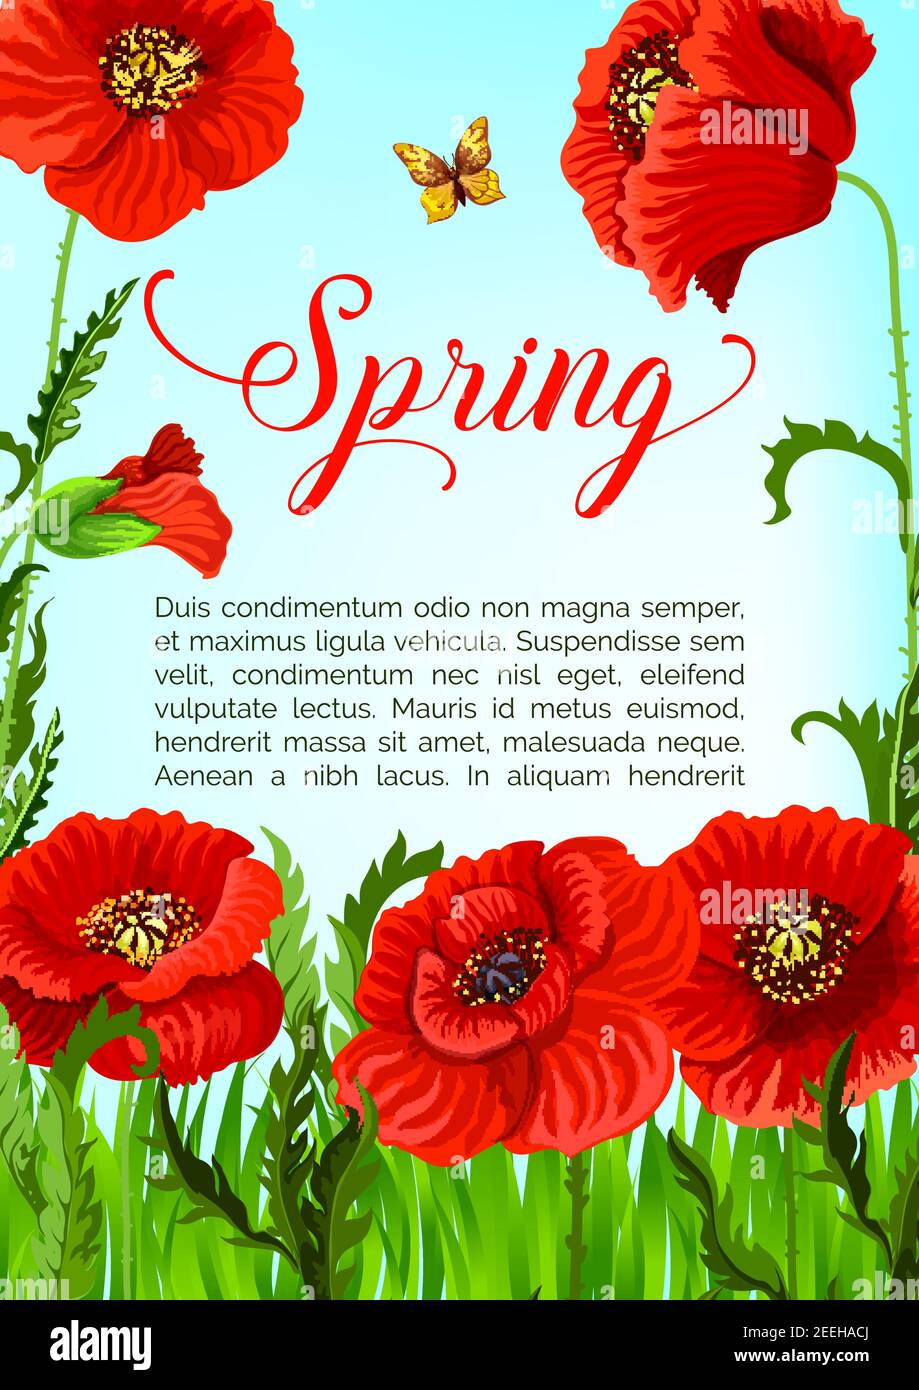 Flower & Garden Greeting Cards Poppies Sunflowers Cherry Blossom Viola